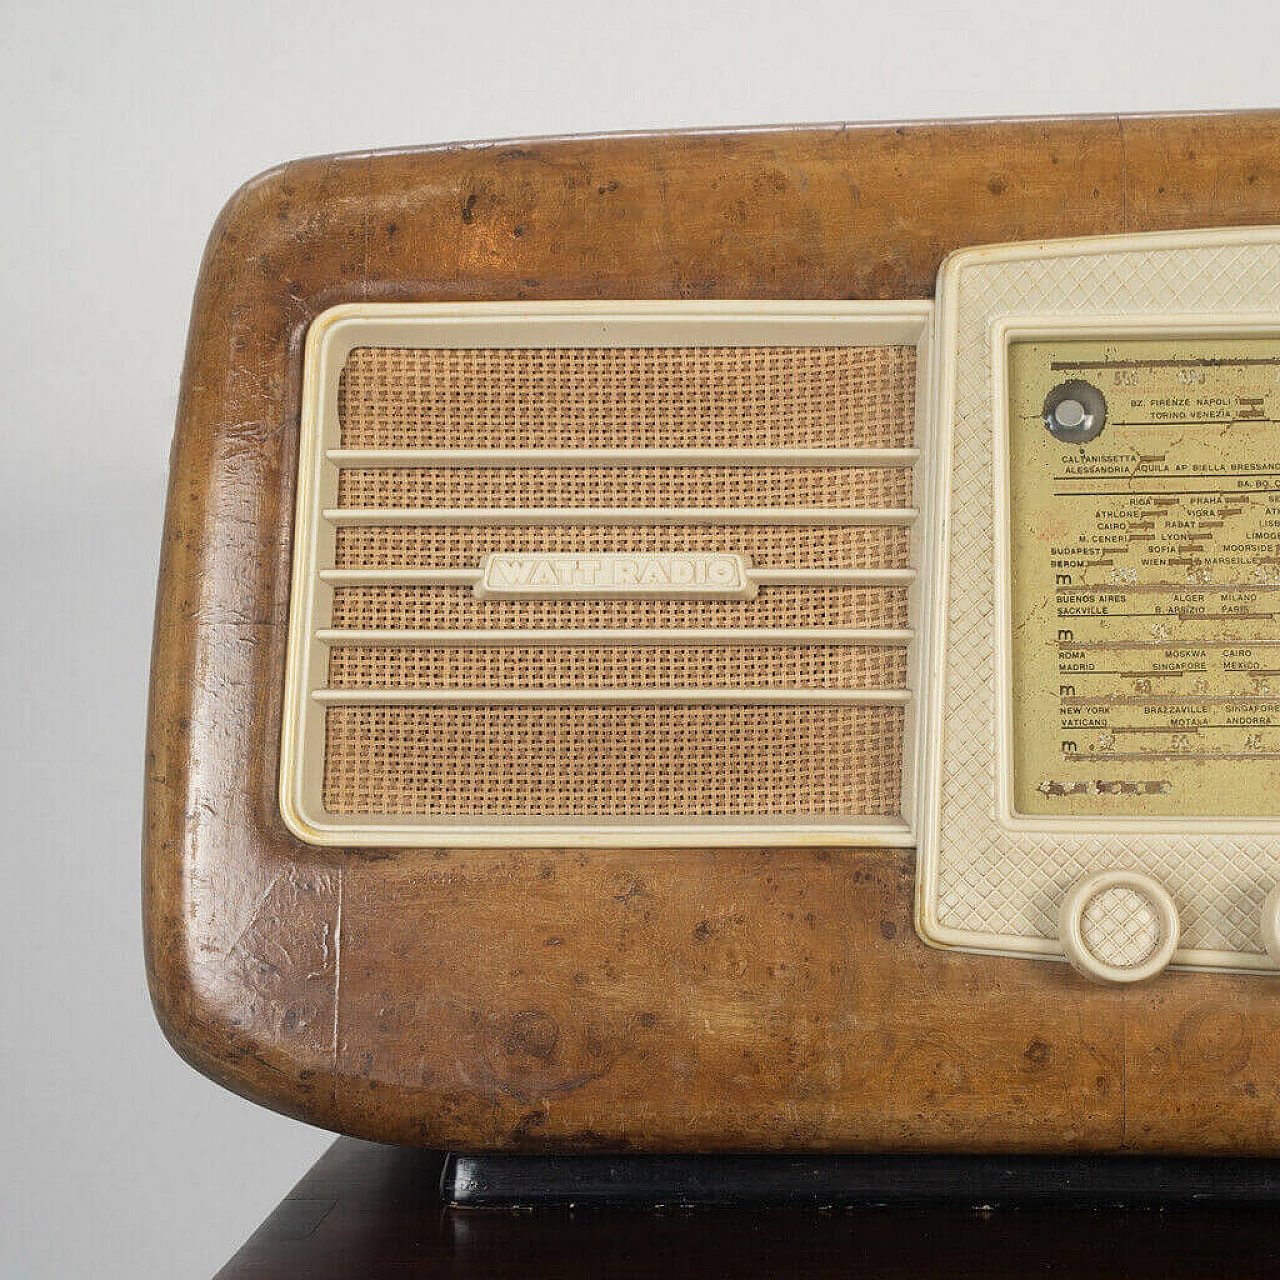 Valve radio WR 650 in wood by Watt Radio, 50s 1183855